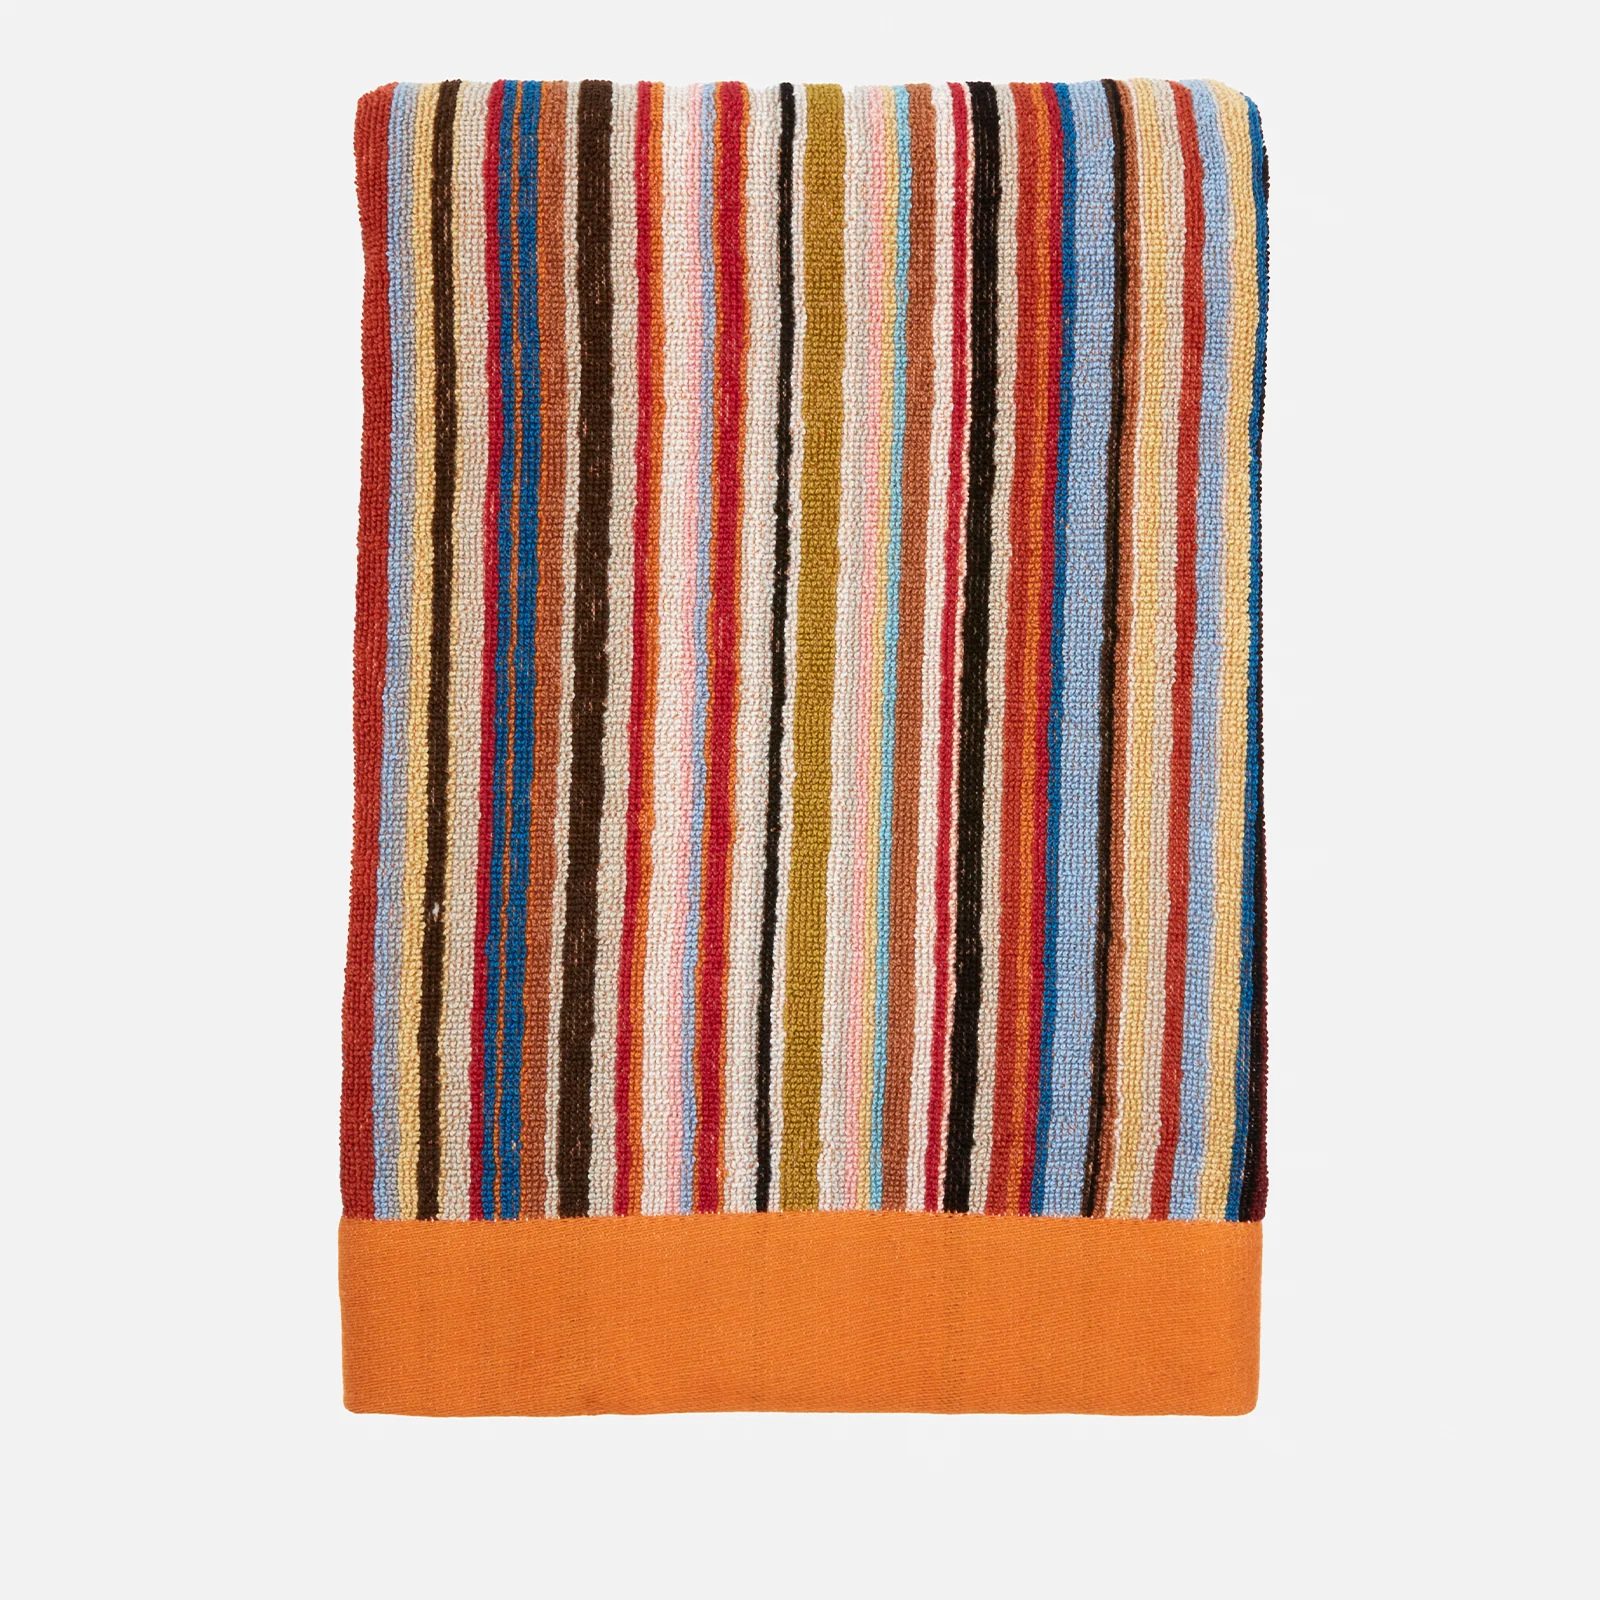 PS Paul Smith Men's Medium Towel - Multi Image 1